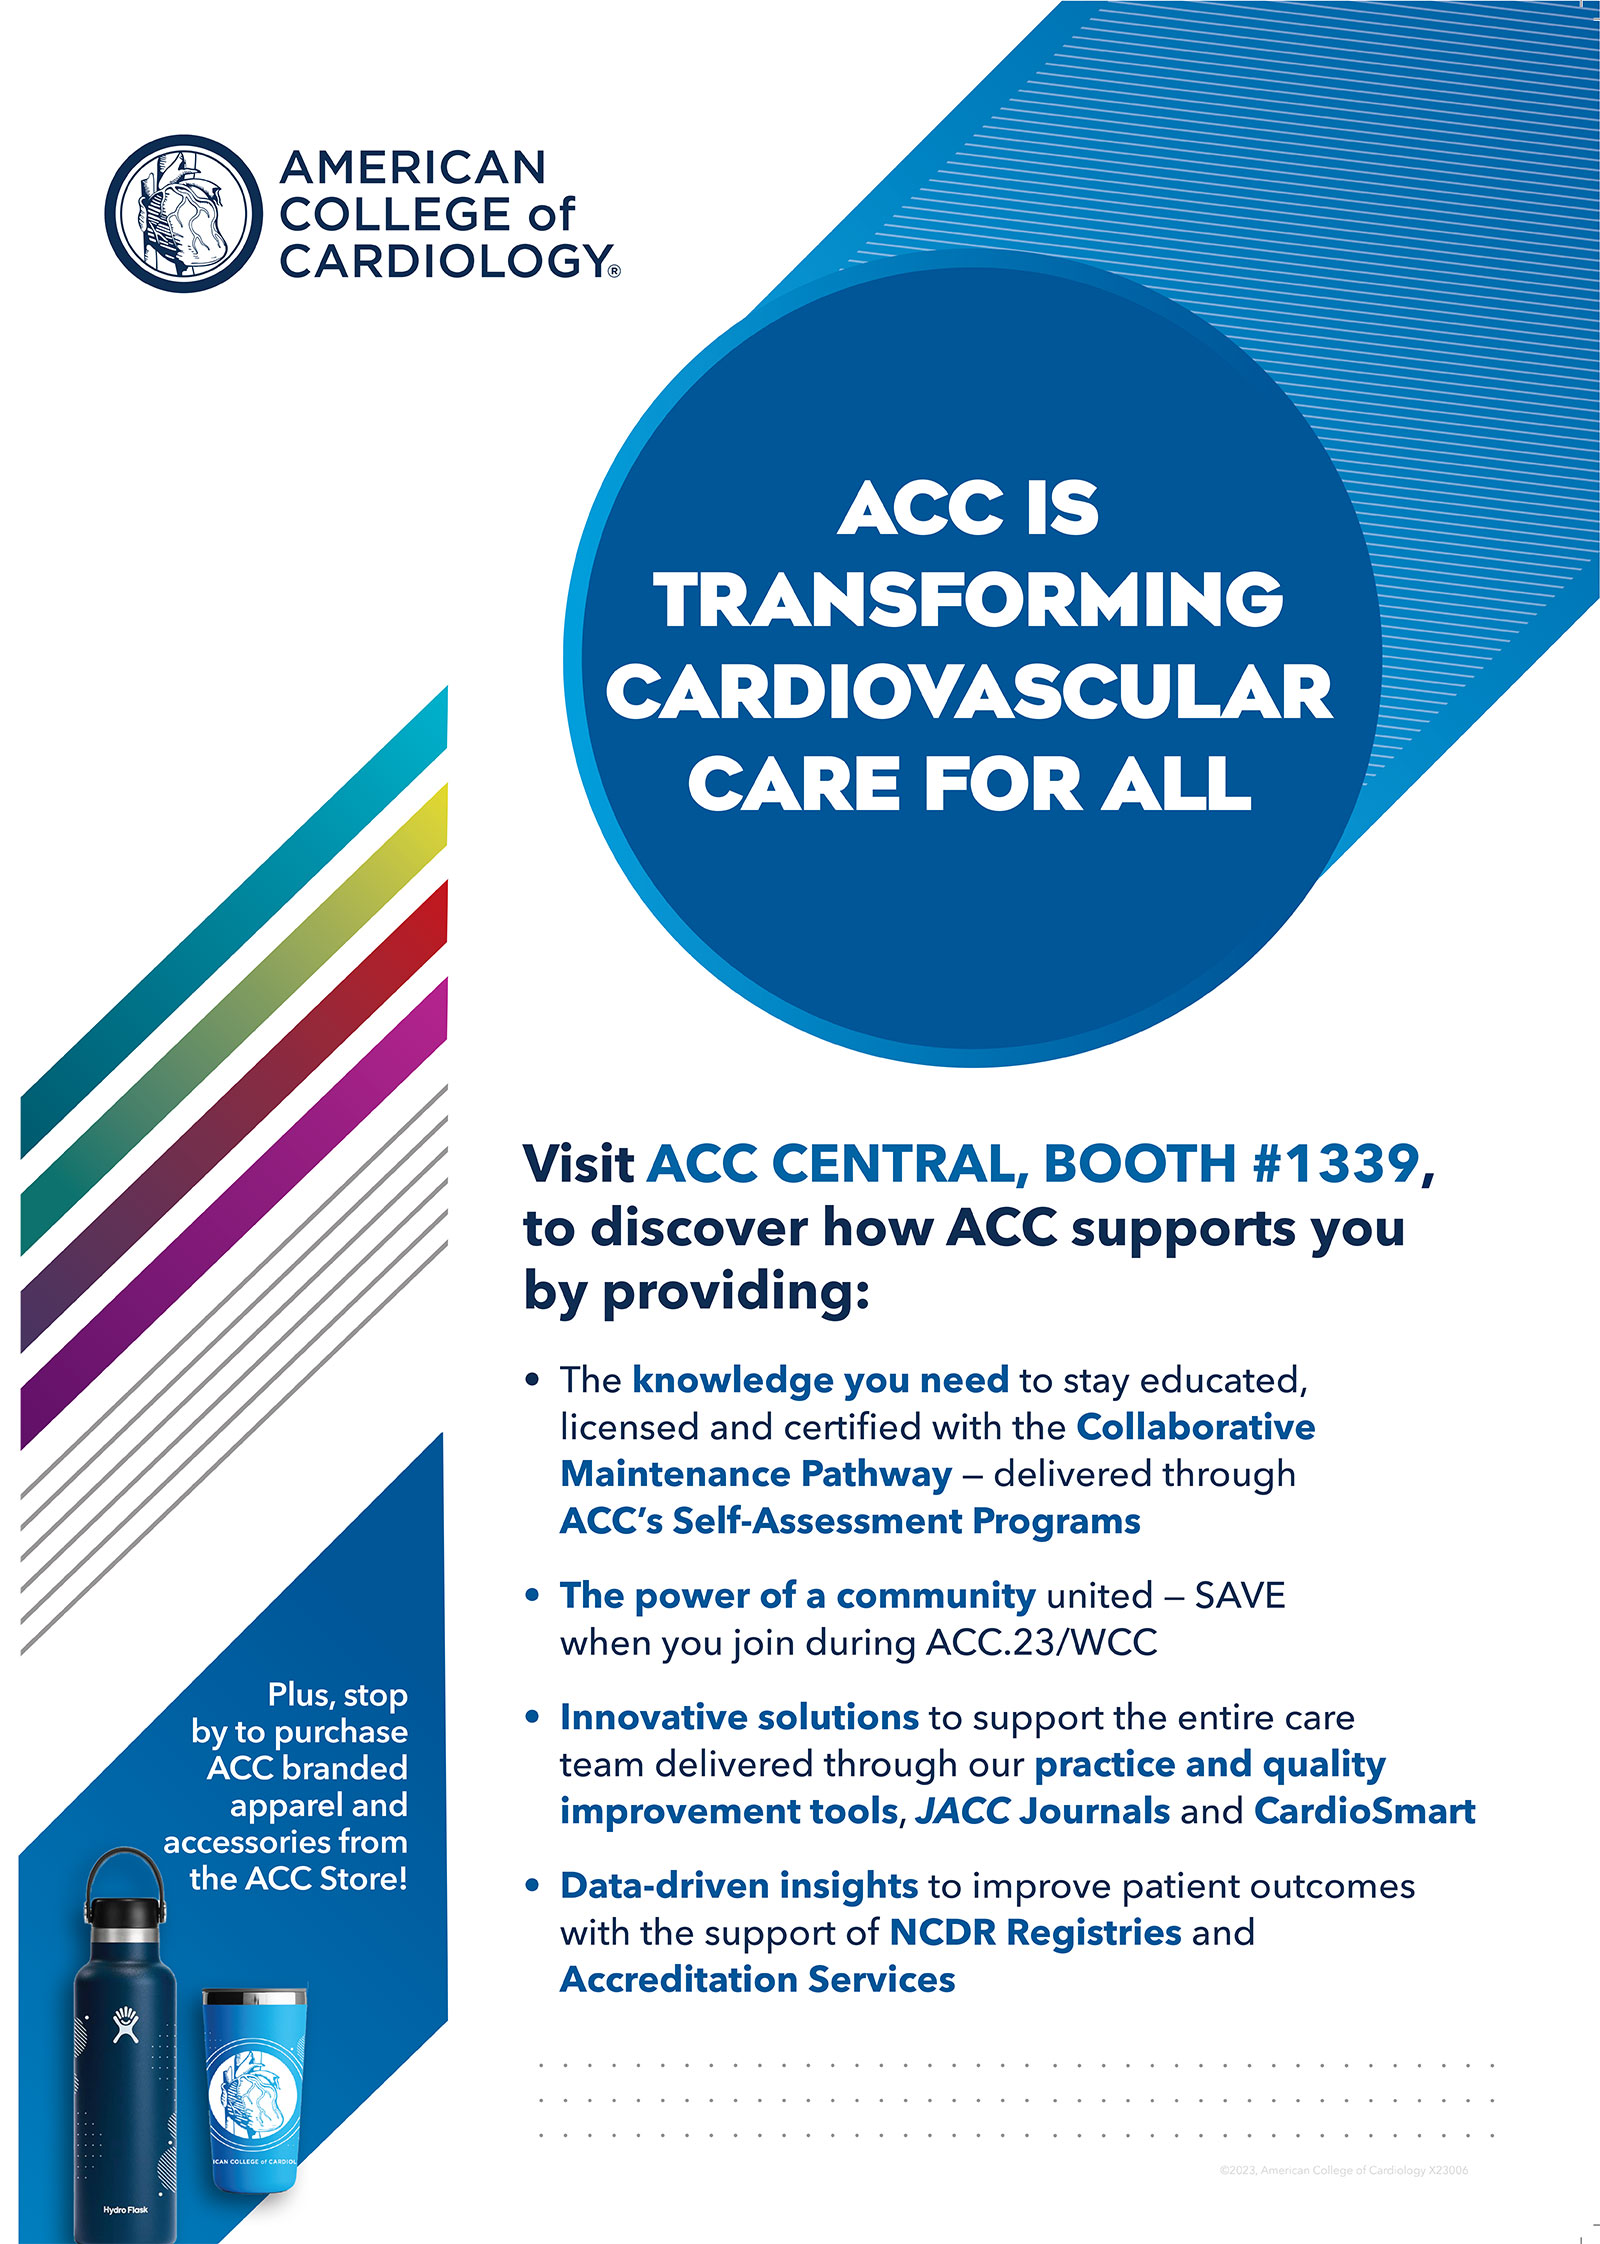 ACC.23/WCC Daily SATURDAY MARCH 4, 2023